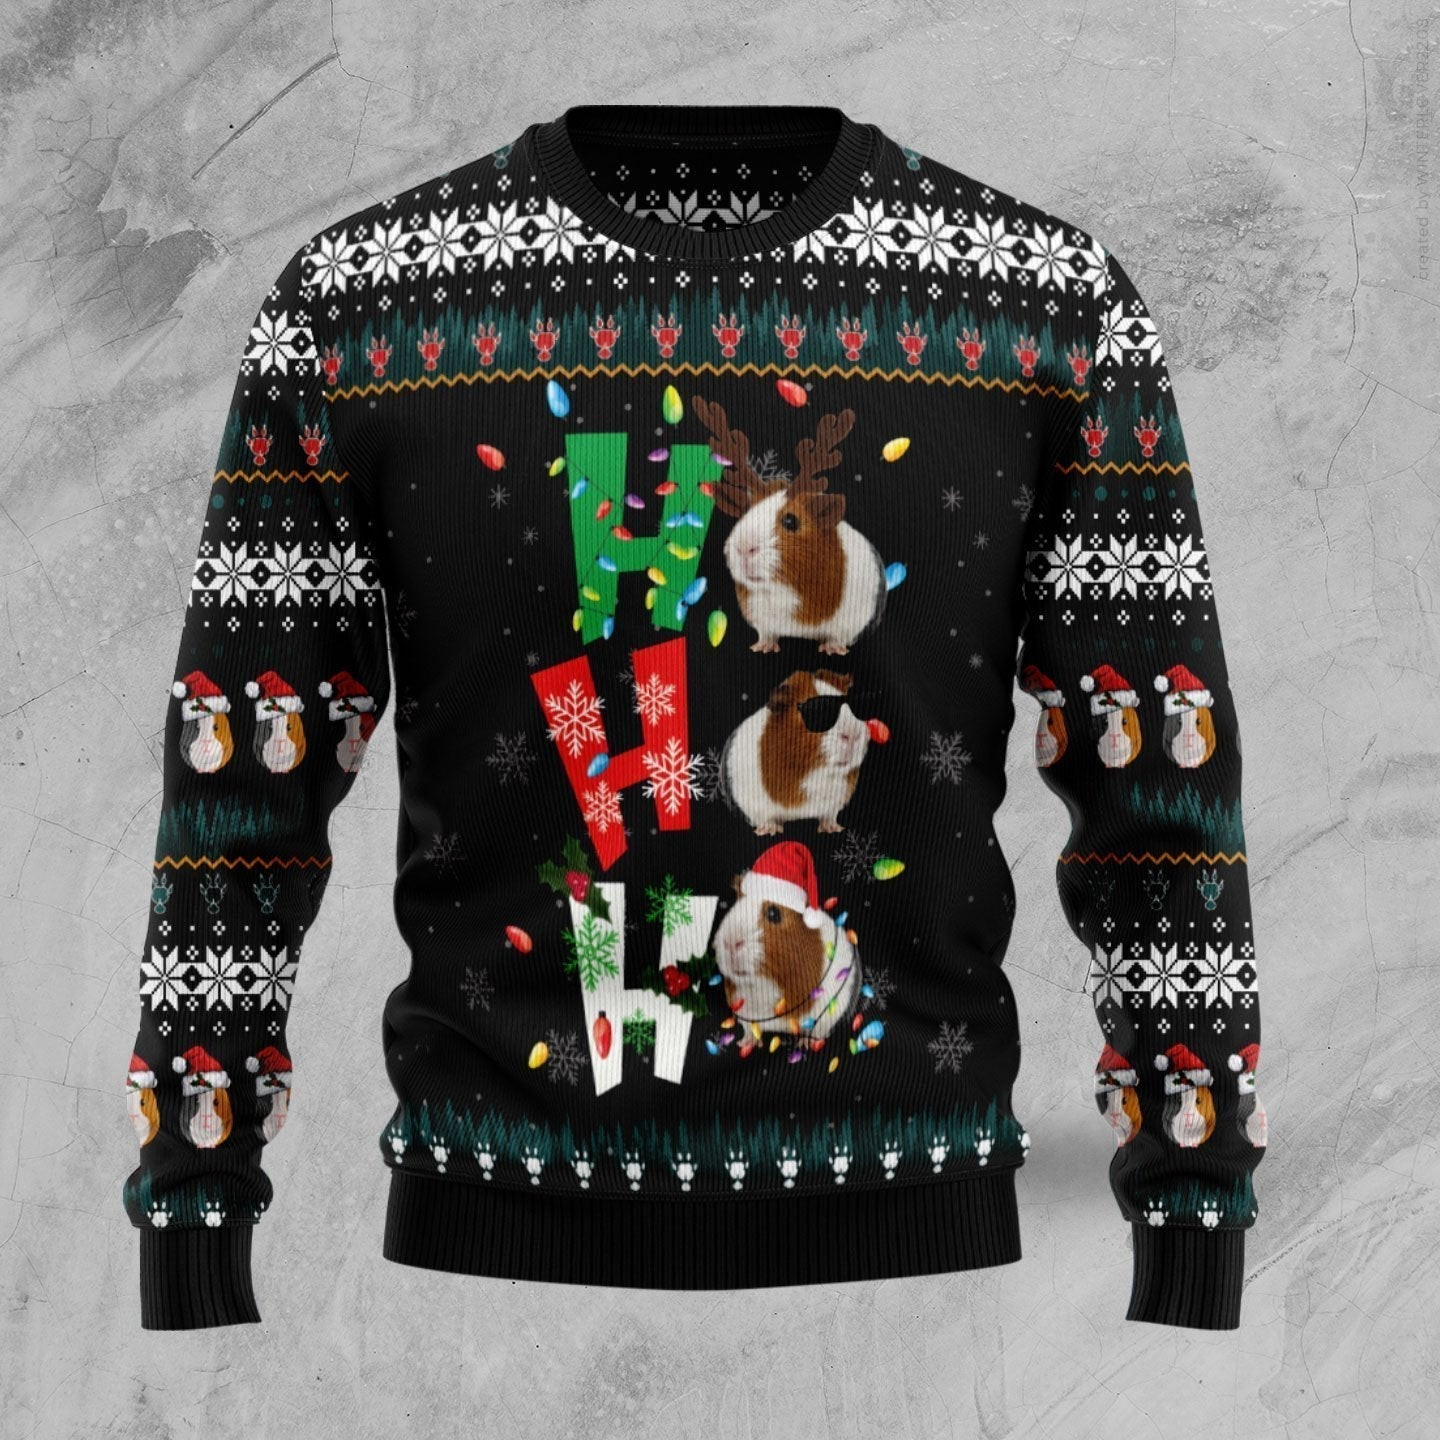 Hohoho Guinea Pig Ugly Christmas Sweater Ugly Sweater For Men Women